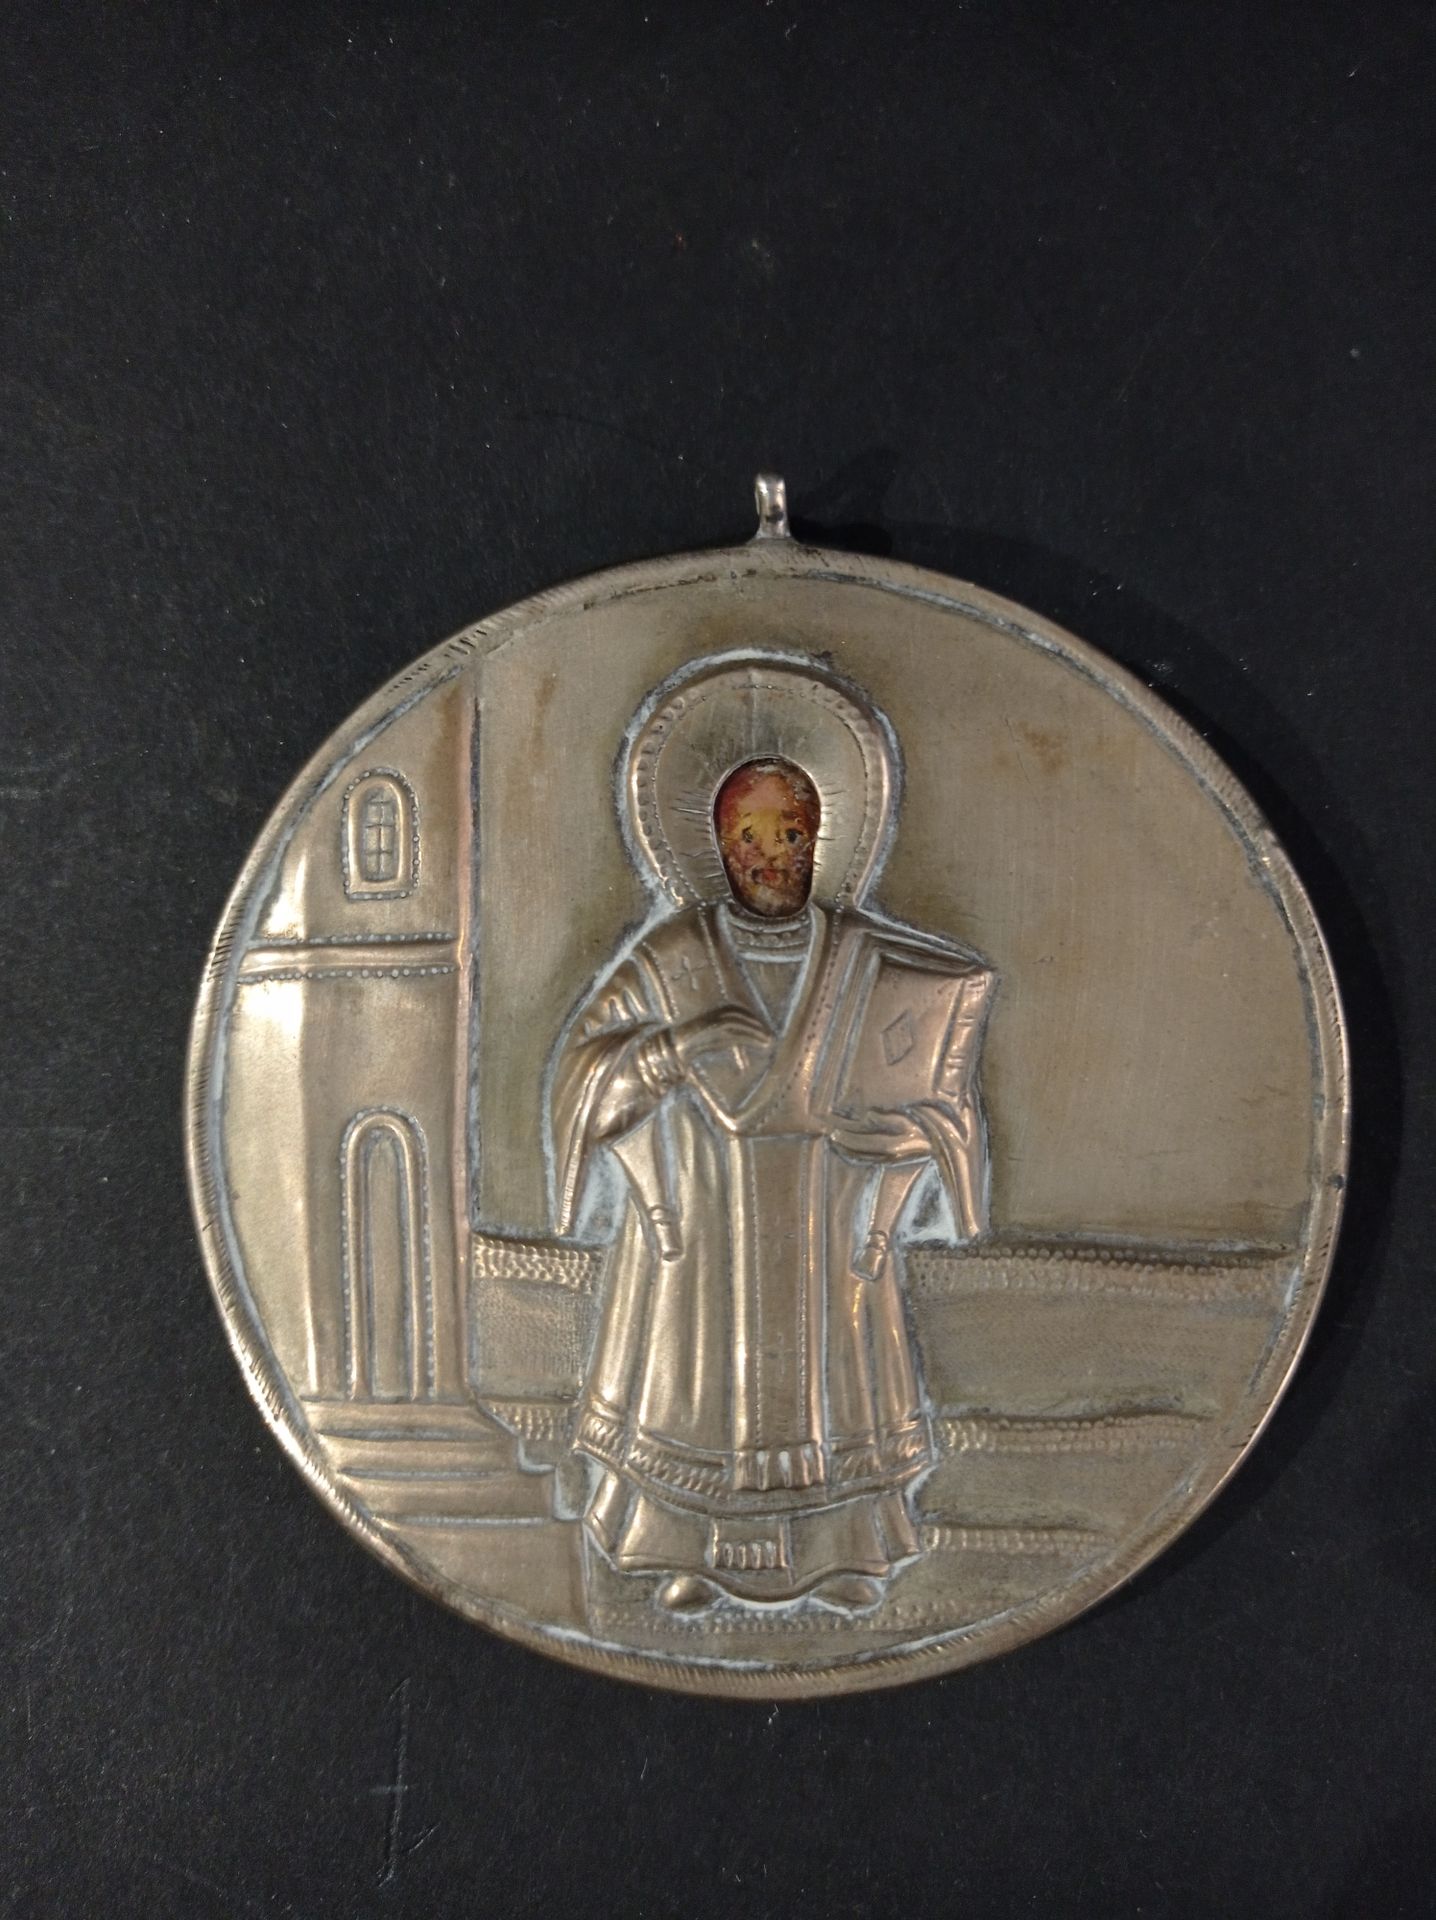 Null RUSSIA, 19th century

Icon pendant in tondo depicting Saint Nicholas the Th&hellip;